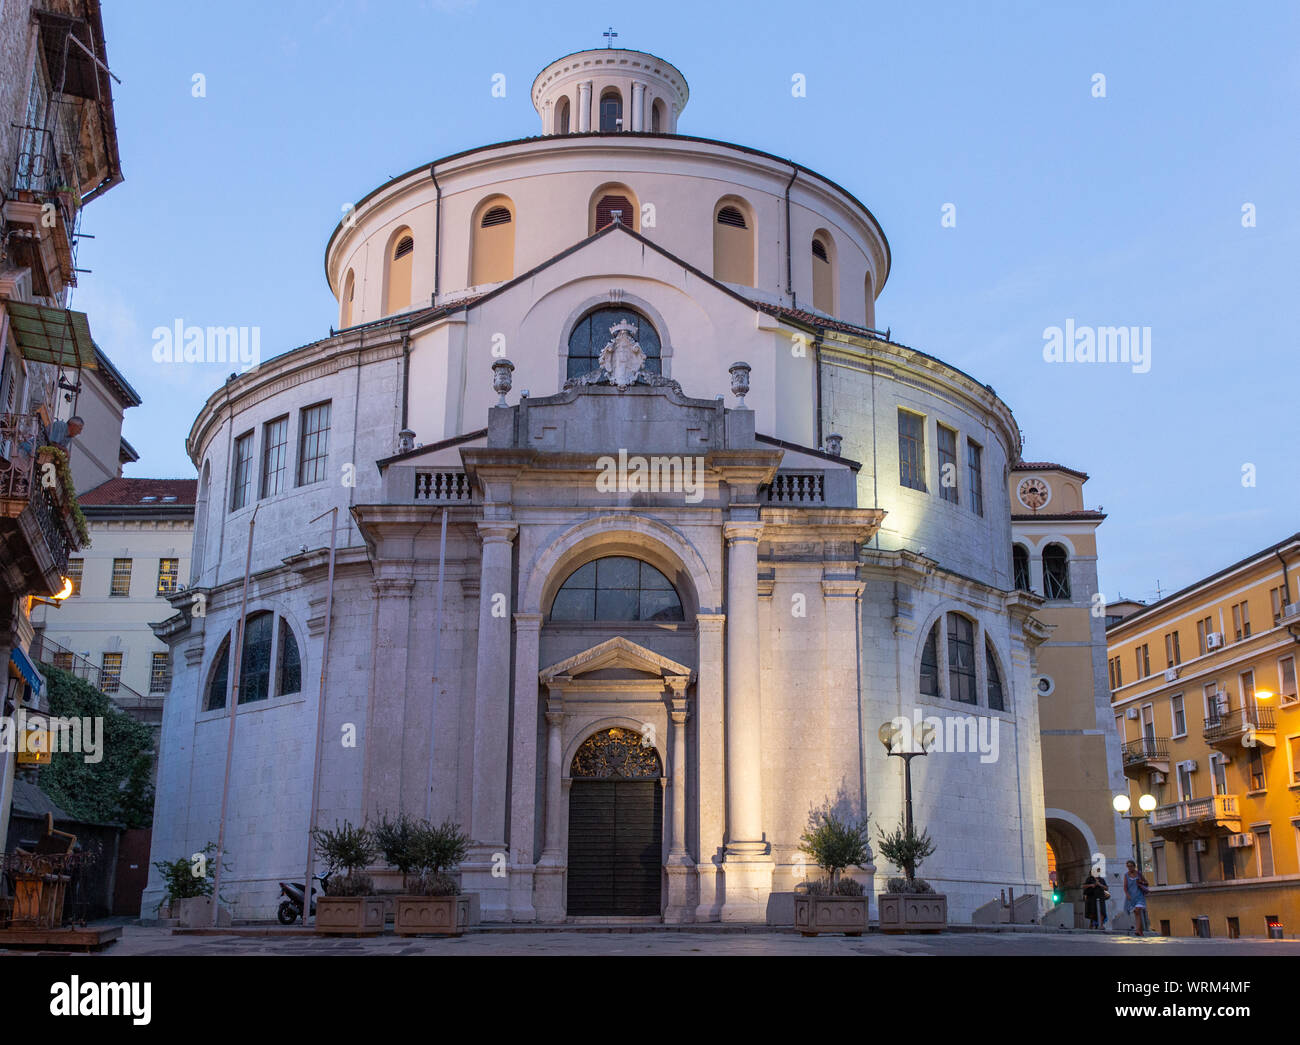 St Vitus (Sv Vida) Roman Catholic Cathedral founded in 1638.  Rijeka, Croatia.  The rotunda architecture is rare for the region. Stock Photo